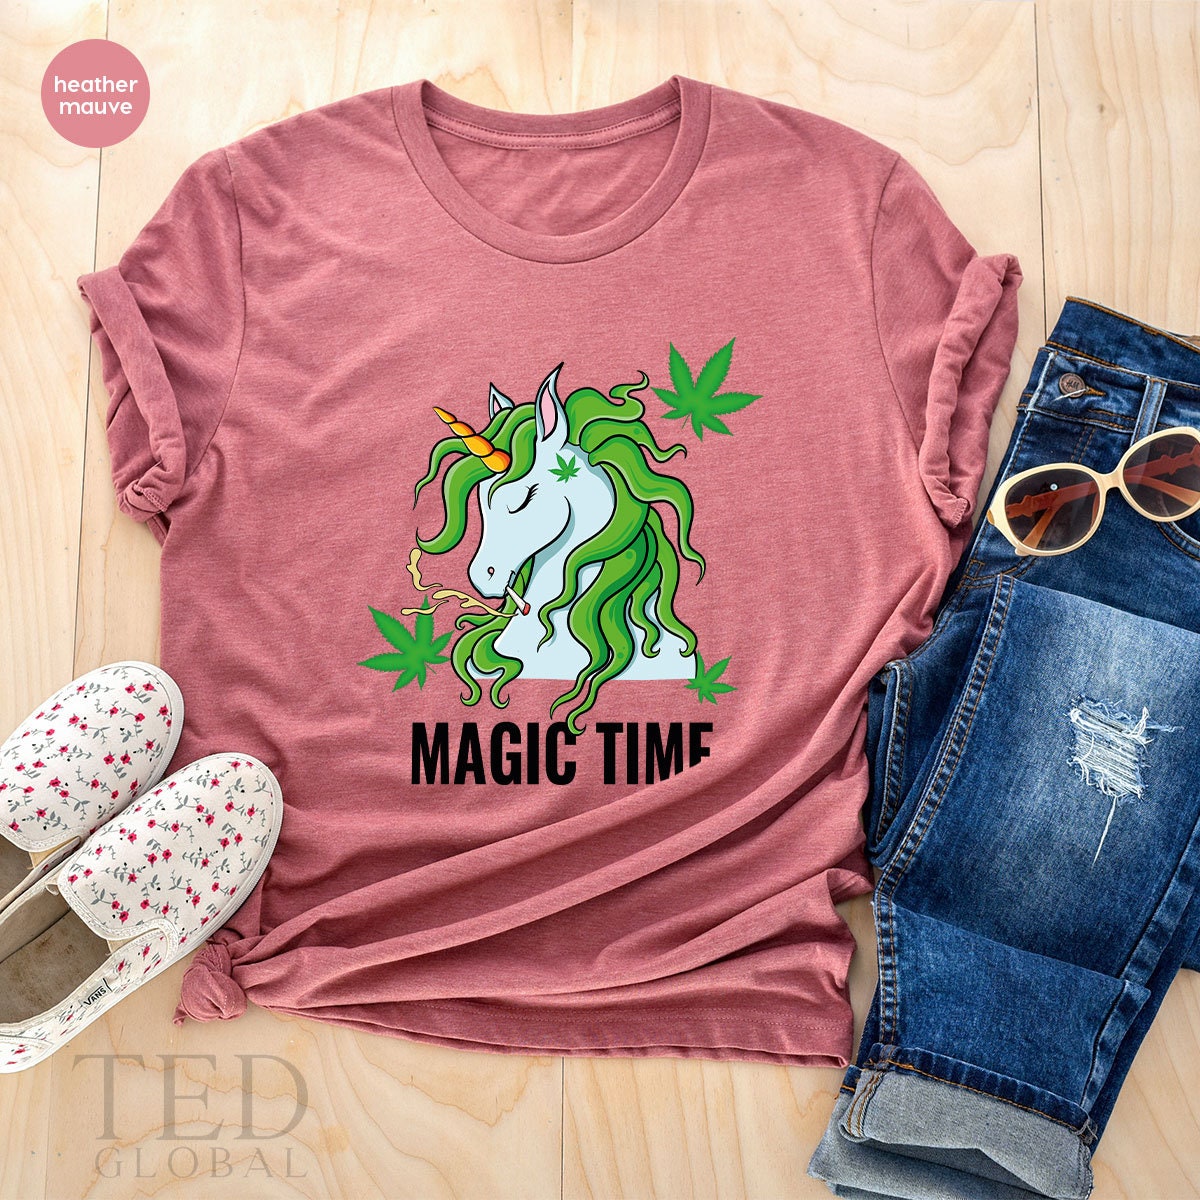 Magic Time Shirt, Funny Weed T Shirt, Cute Unicorn T Shirt, Weed Lover Shirts, Smoking Tee, Cannabis T-Shirt, Marijuana Gift For Christmas - Fastdeliverytees.com